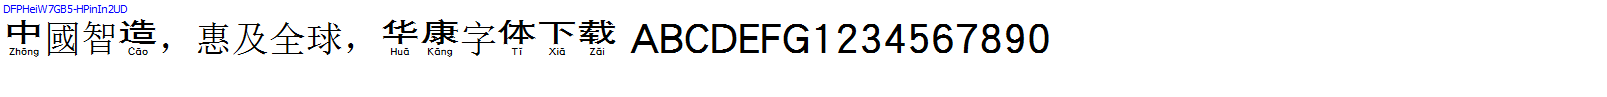 華康字體DFPHeiW7GB5-HPinIn2UD.TTF